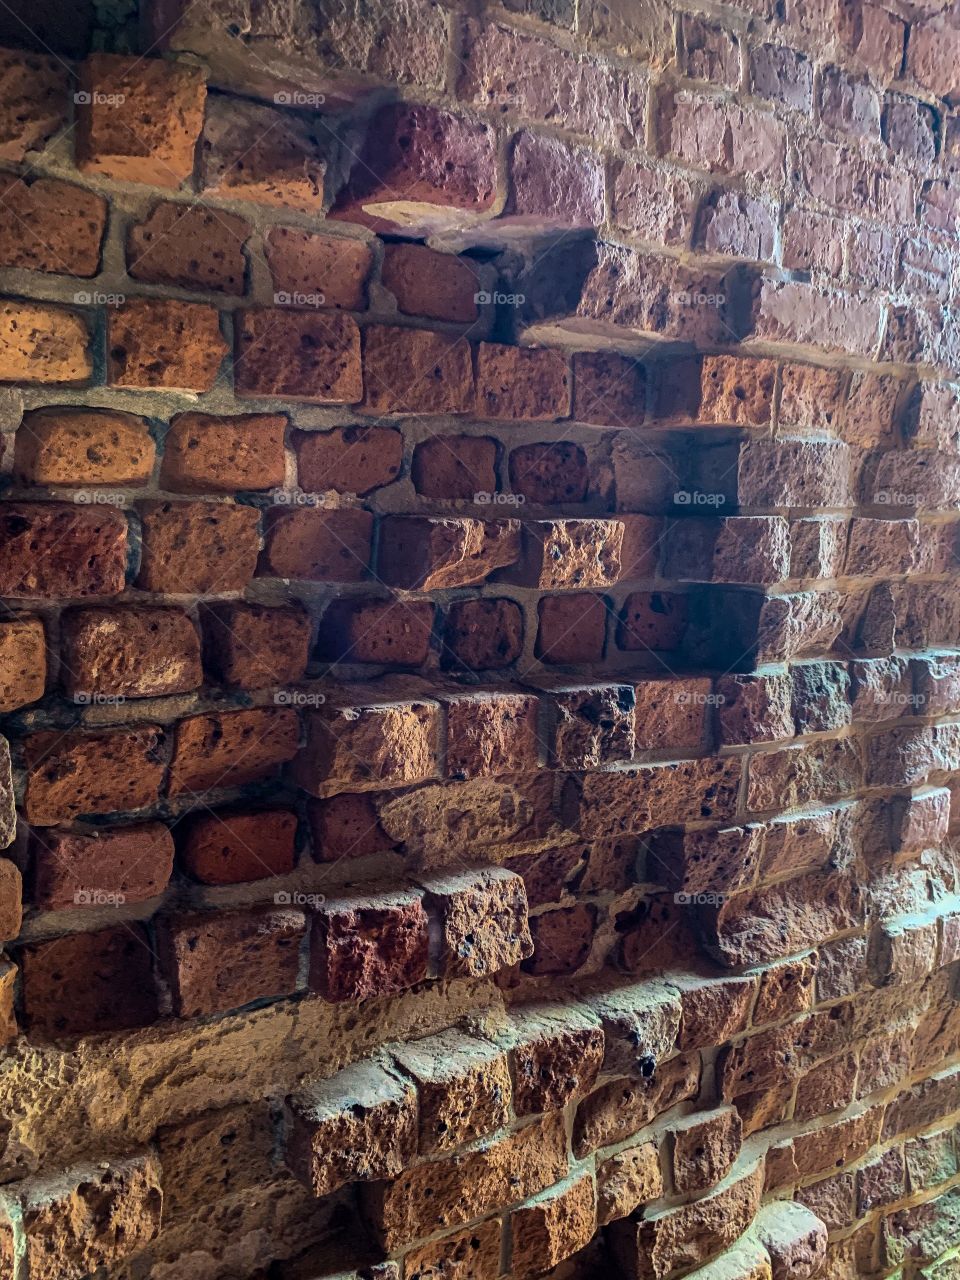 Ye olde brick wall